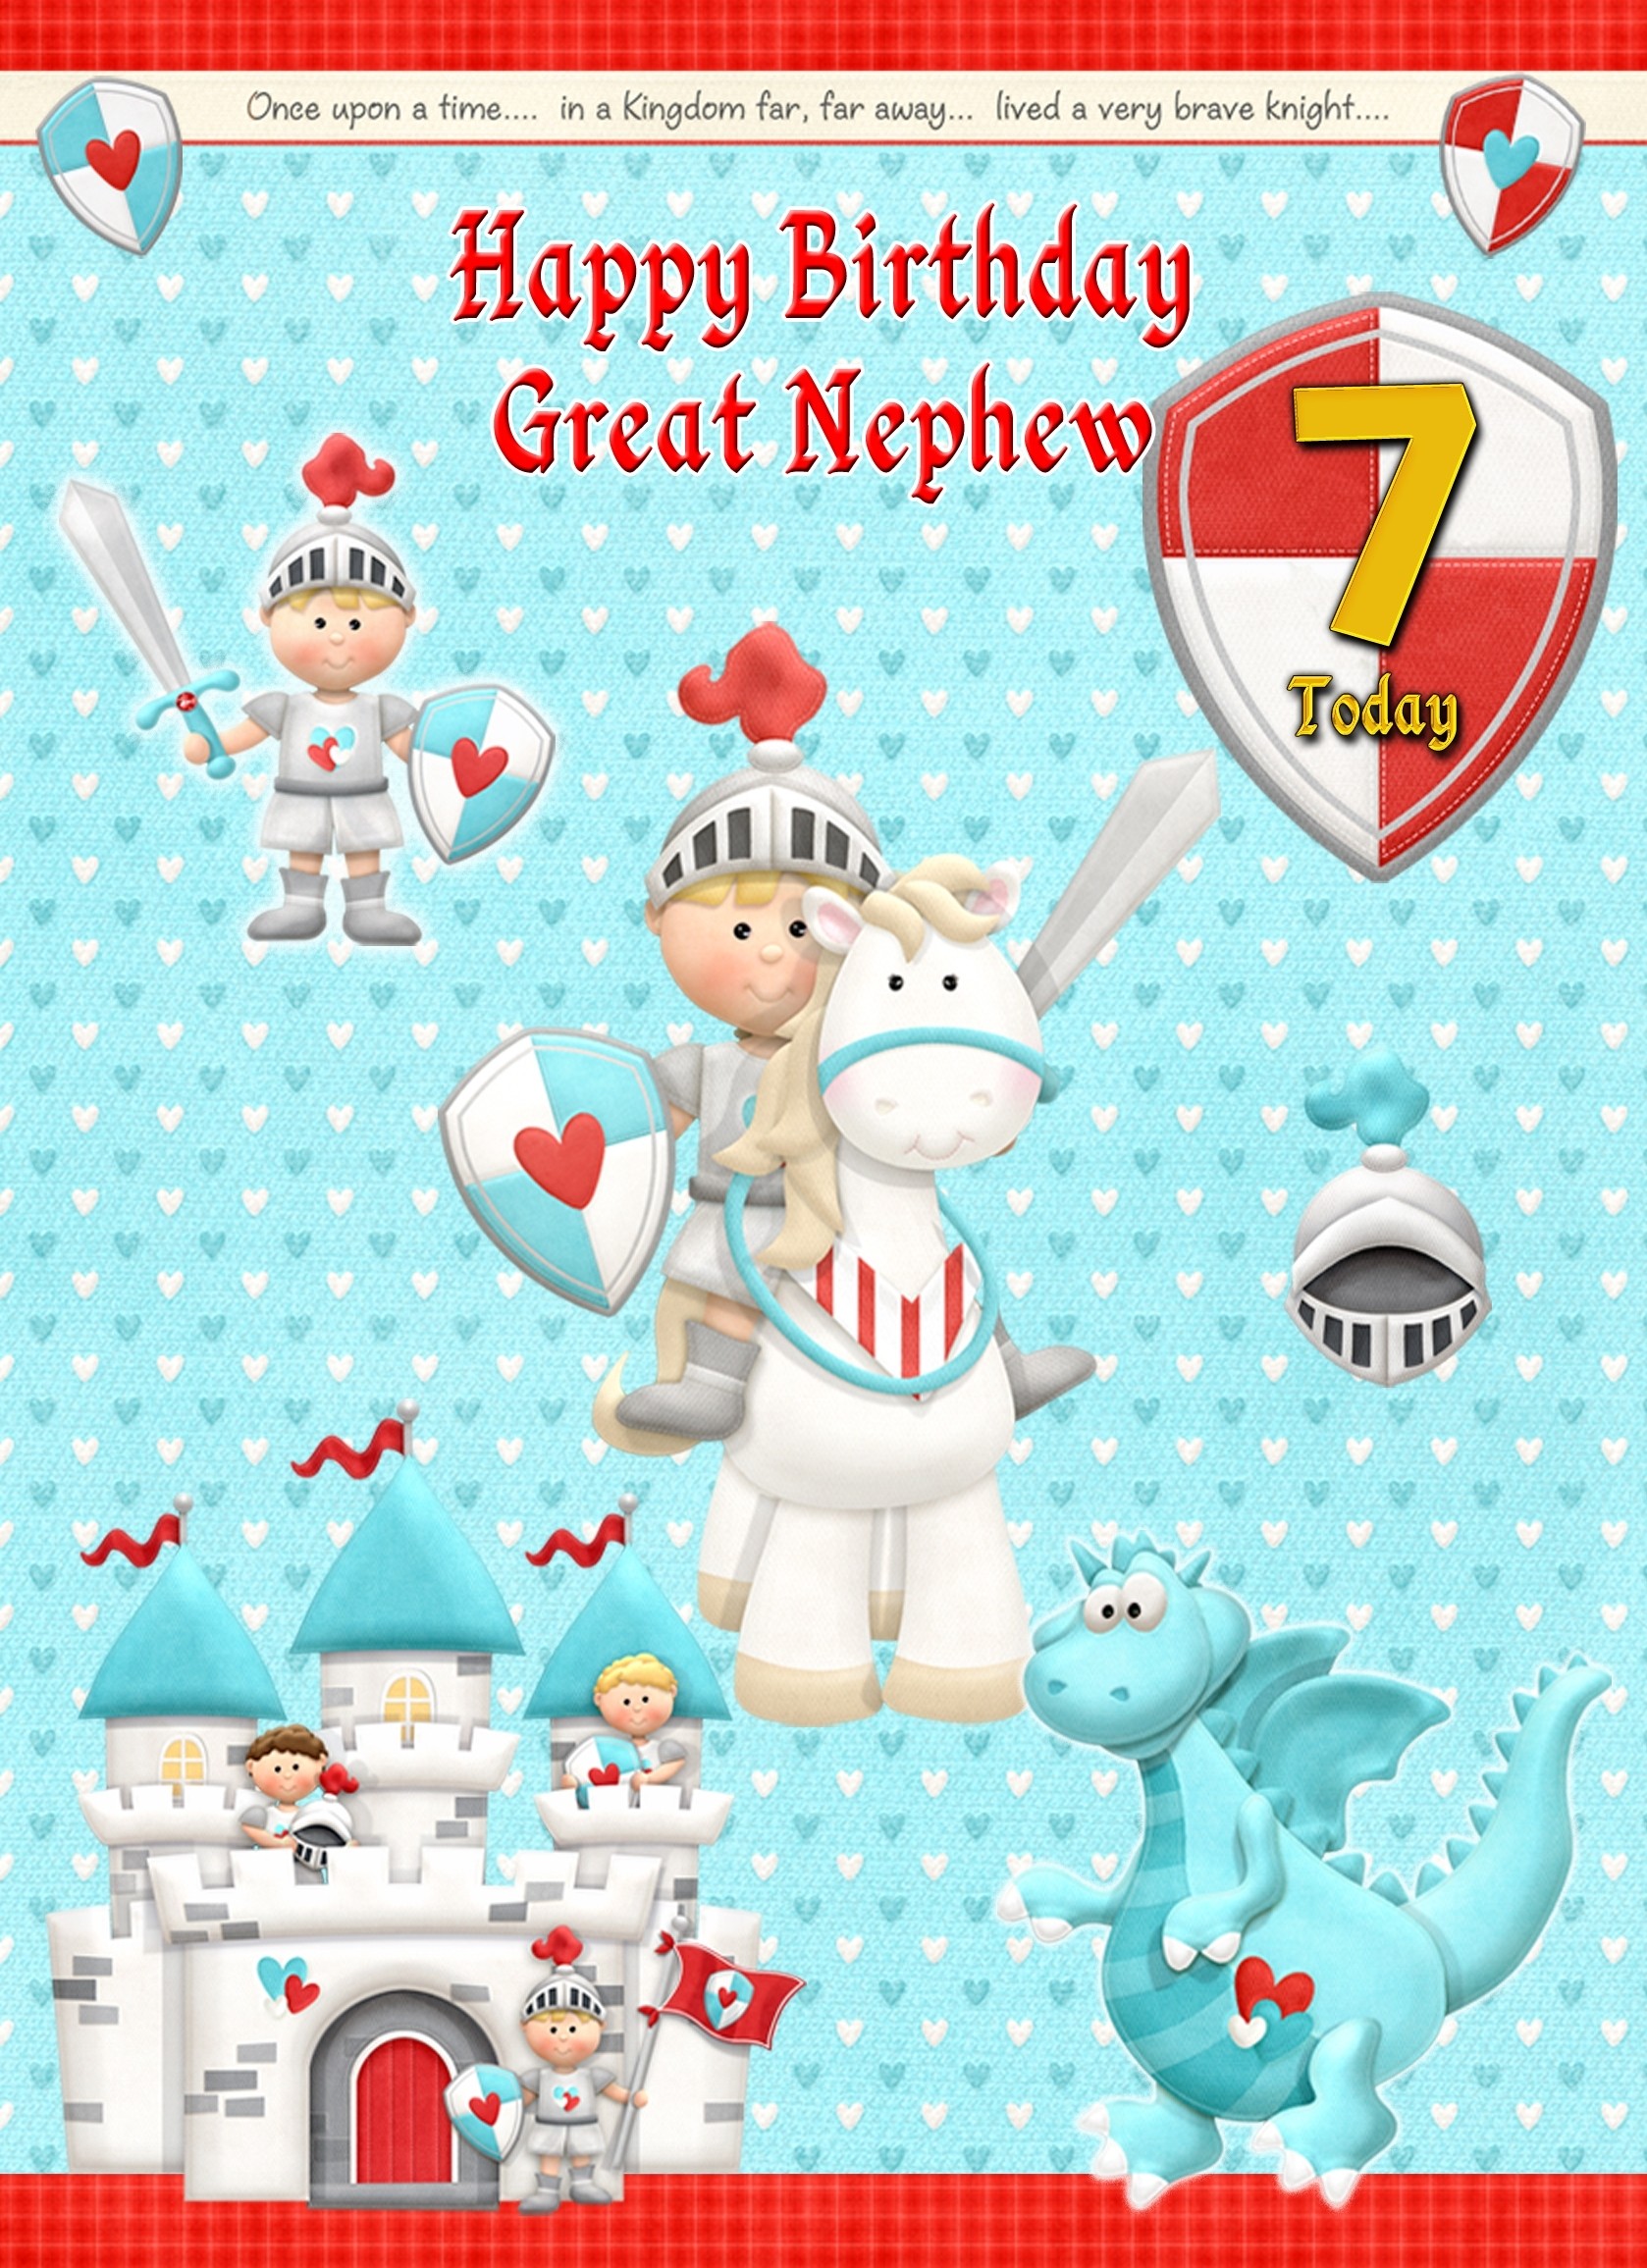 Kids 7th Birthday Hero Knight Cartoon Card for Great Nephew